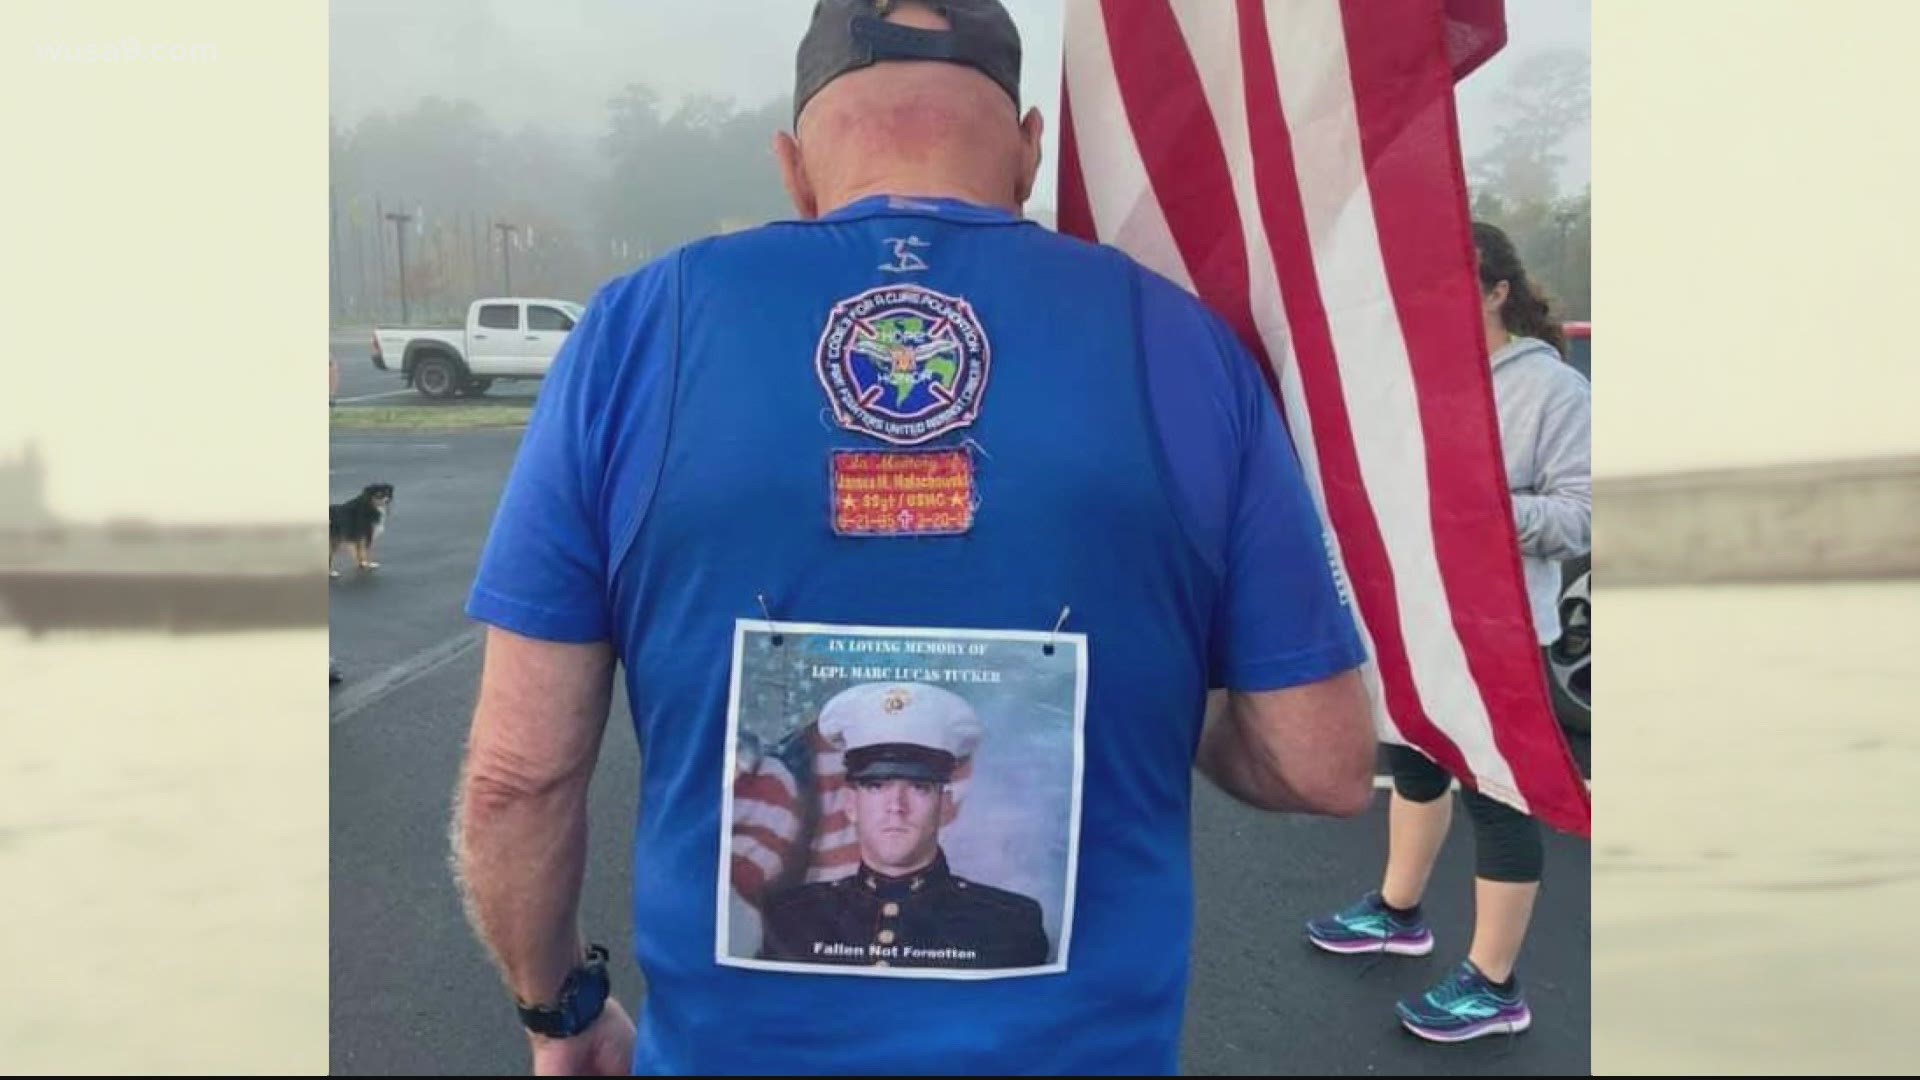 Sid Busch has run nearly 1,000 marathon and half-marathons to honor fallen heroes.